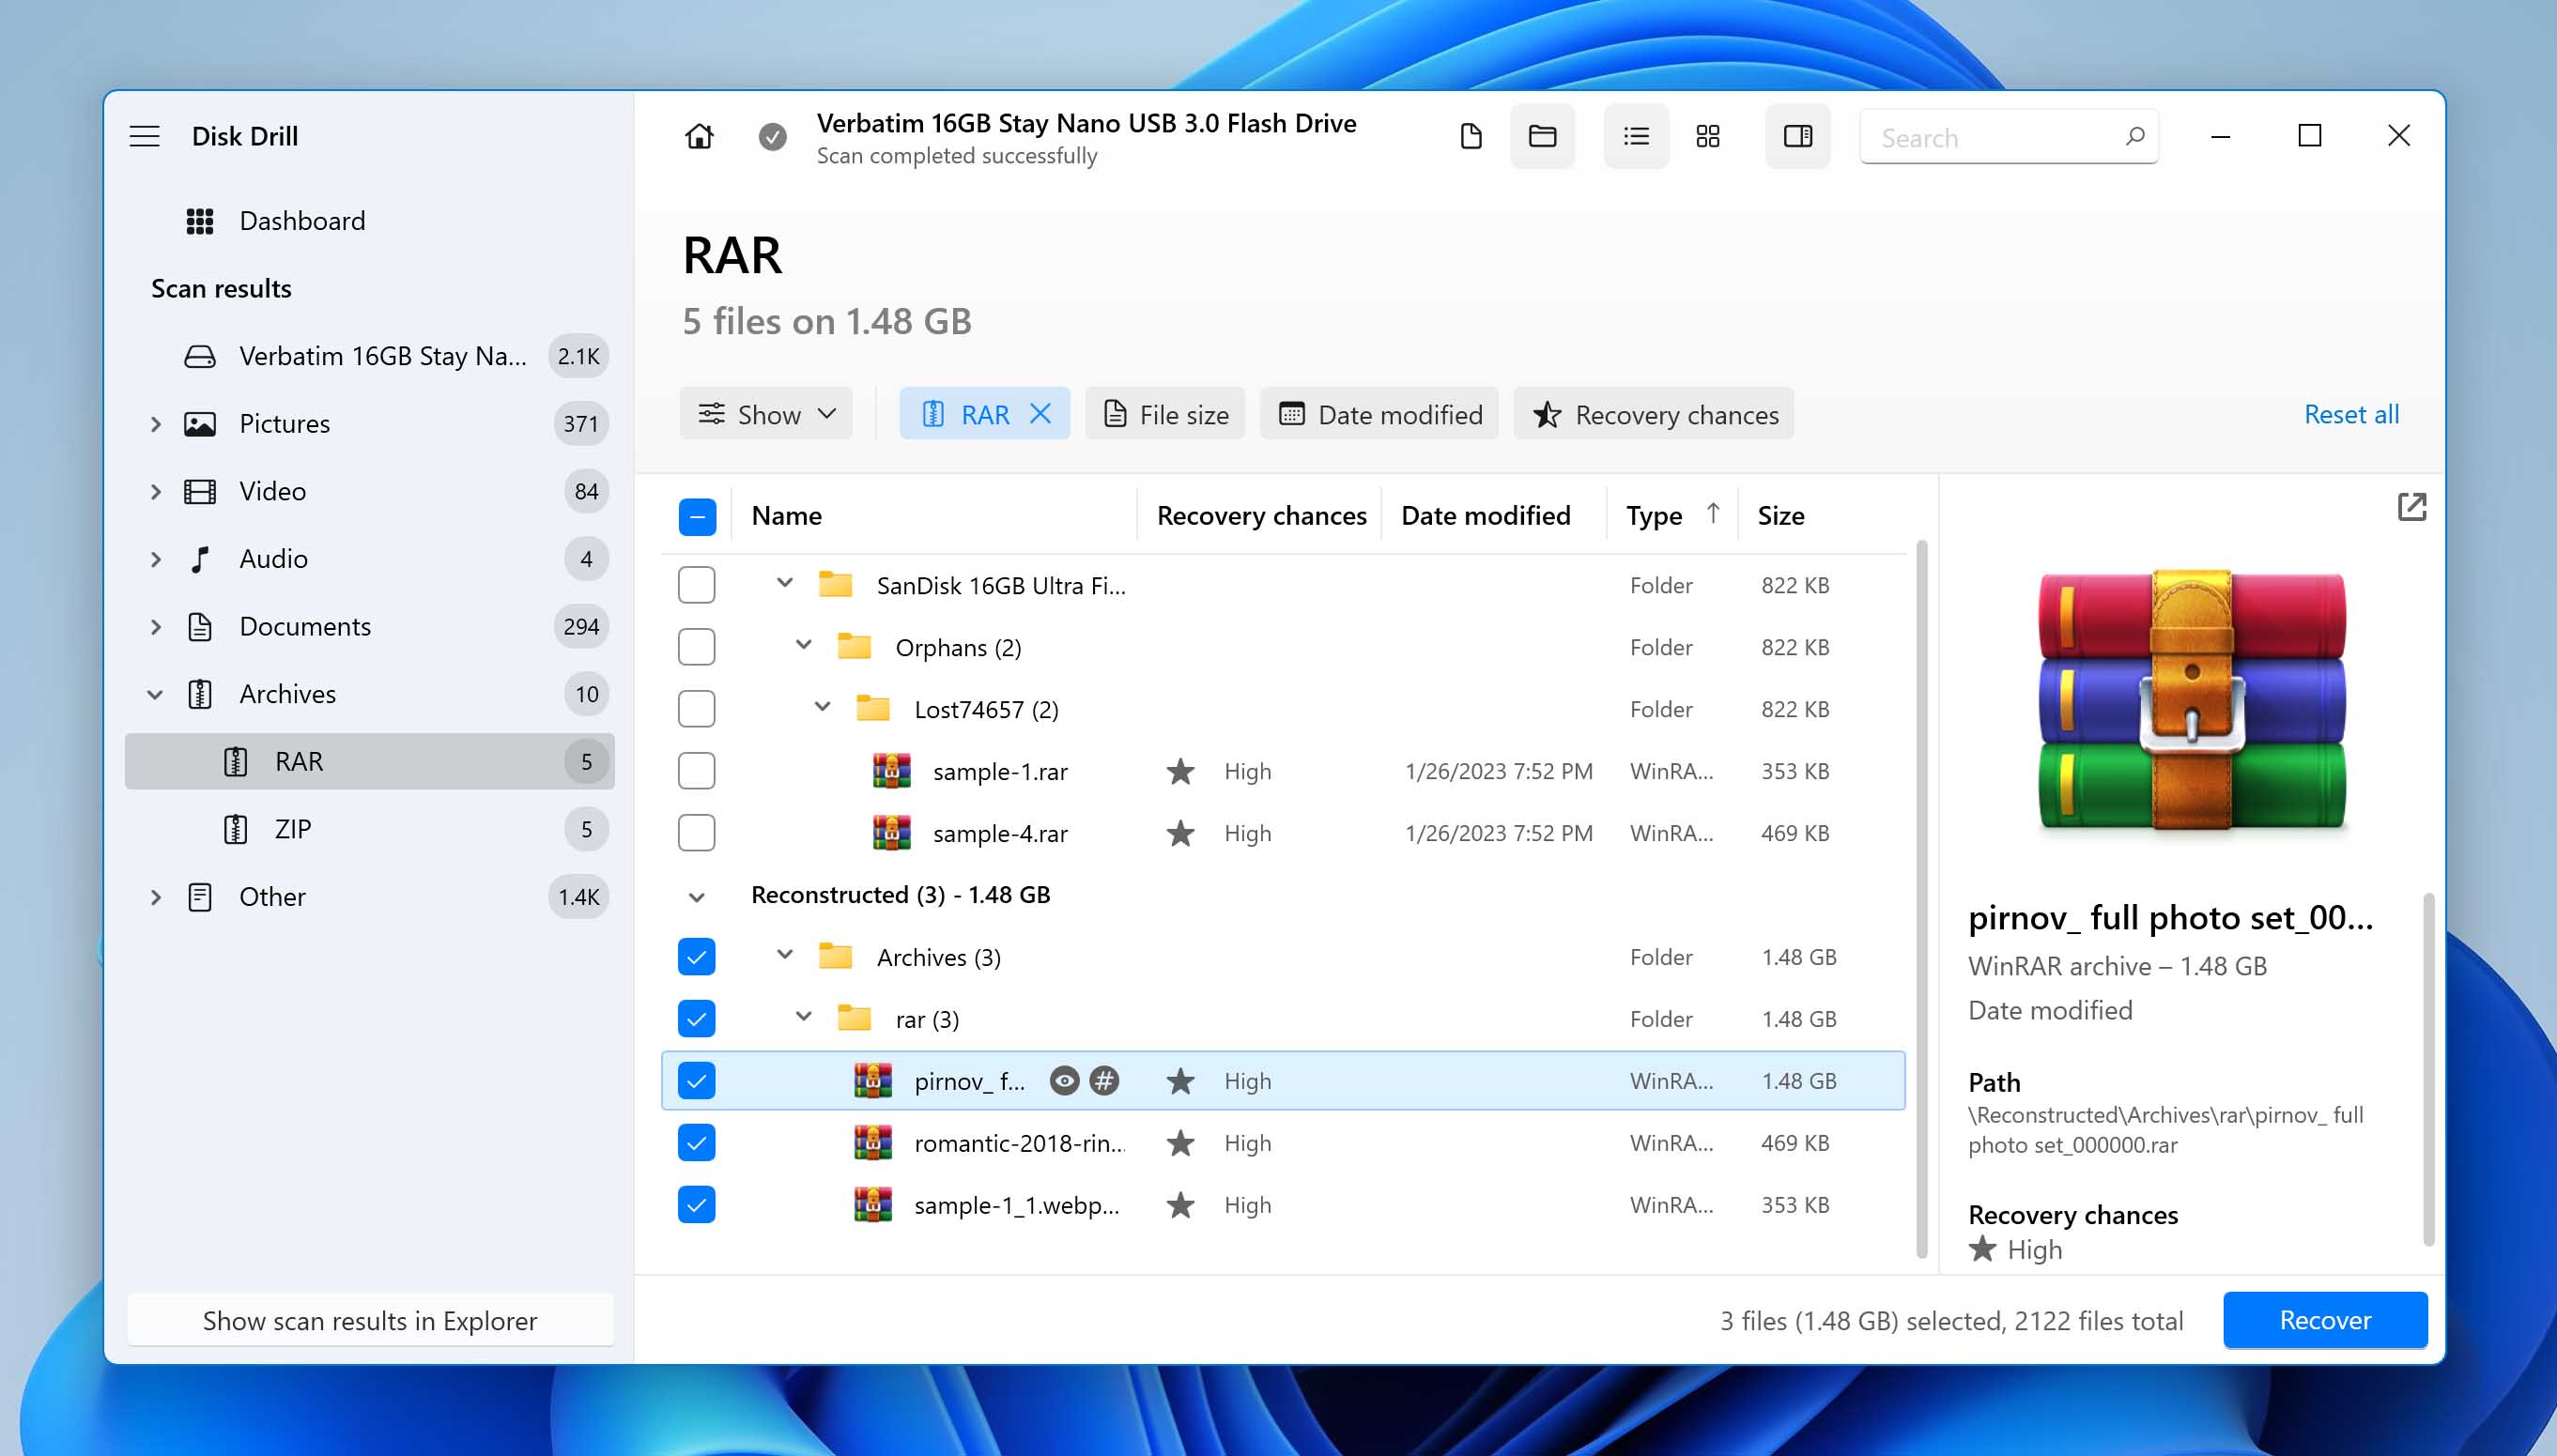 Select the RAR files to recover.